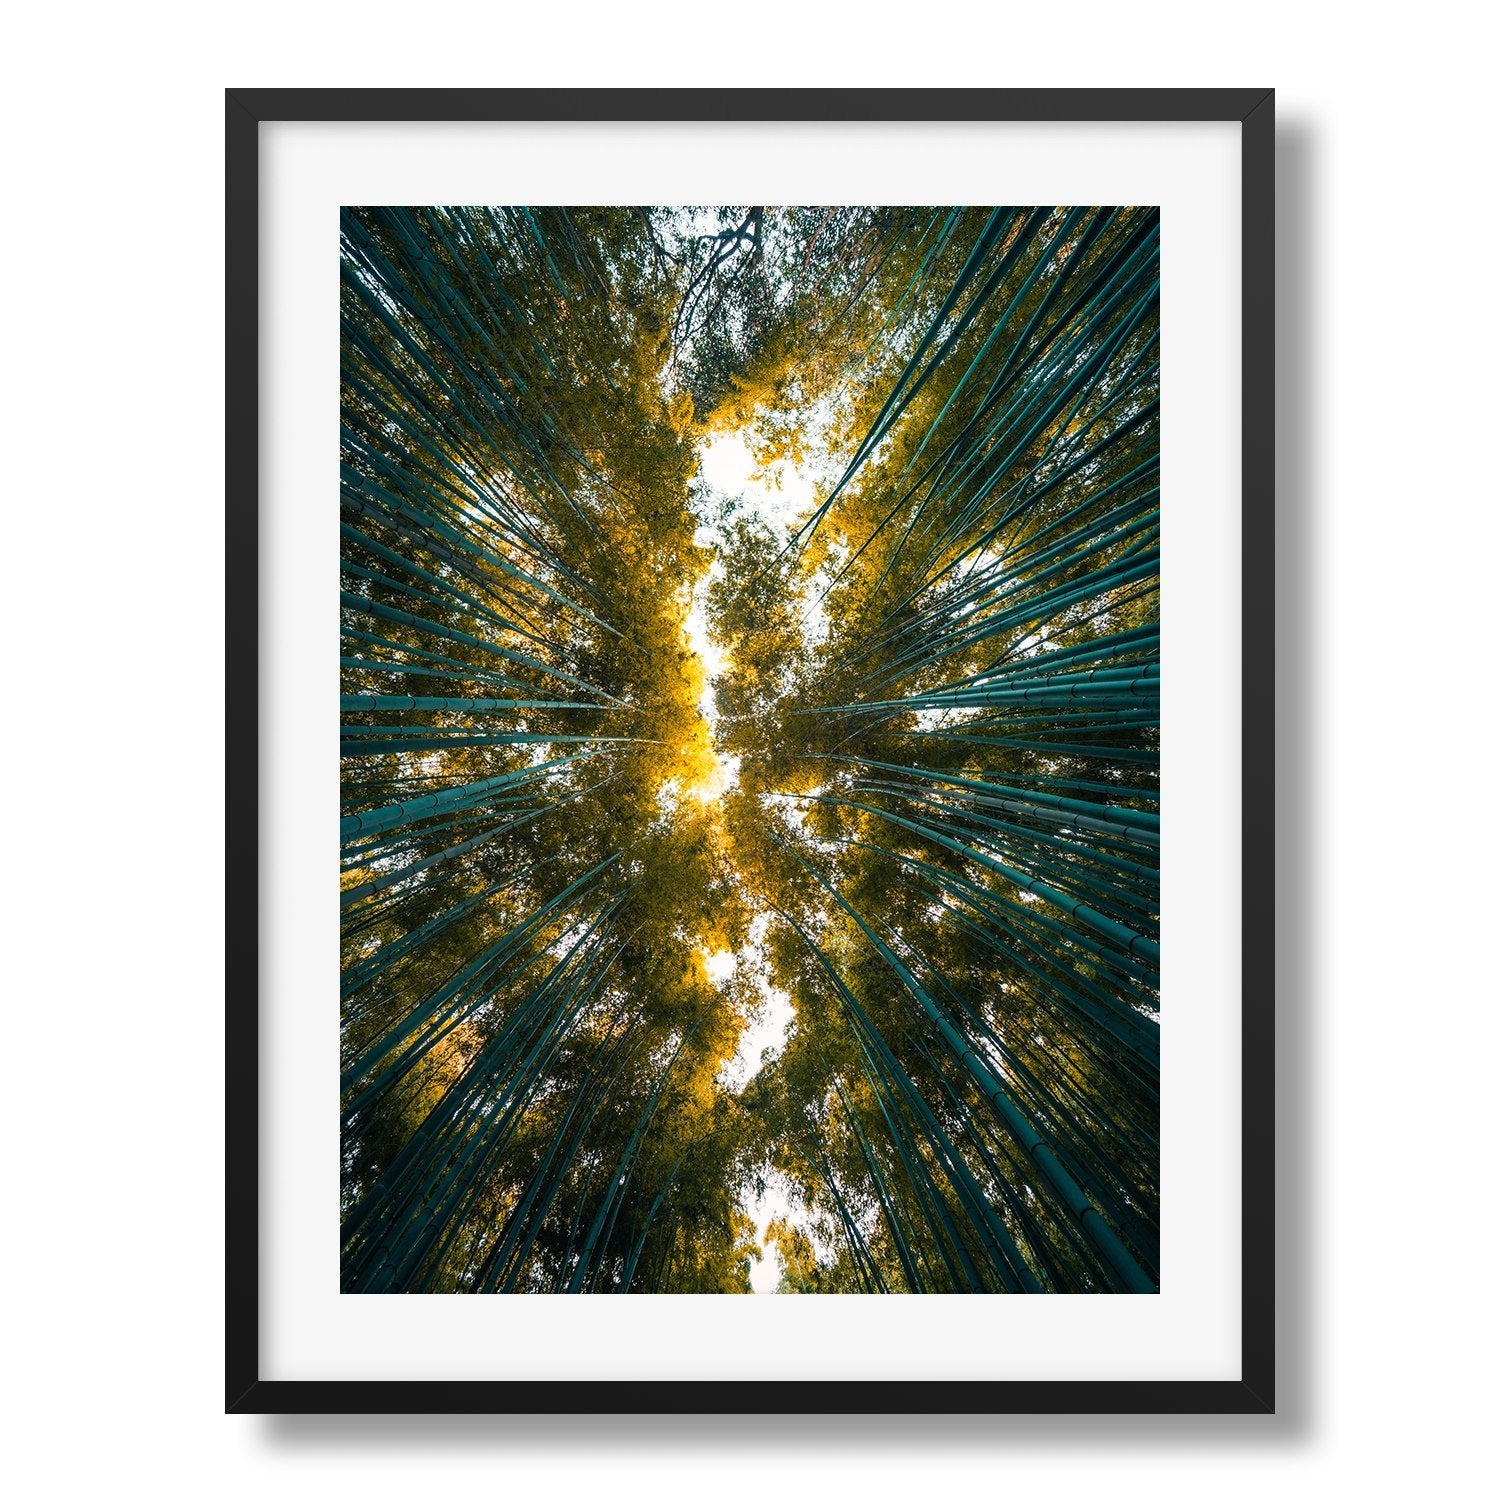 Looking Up The Bamboo Grove, Kyoto Japan | Premium Framed Print - Peter Yan Studio